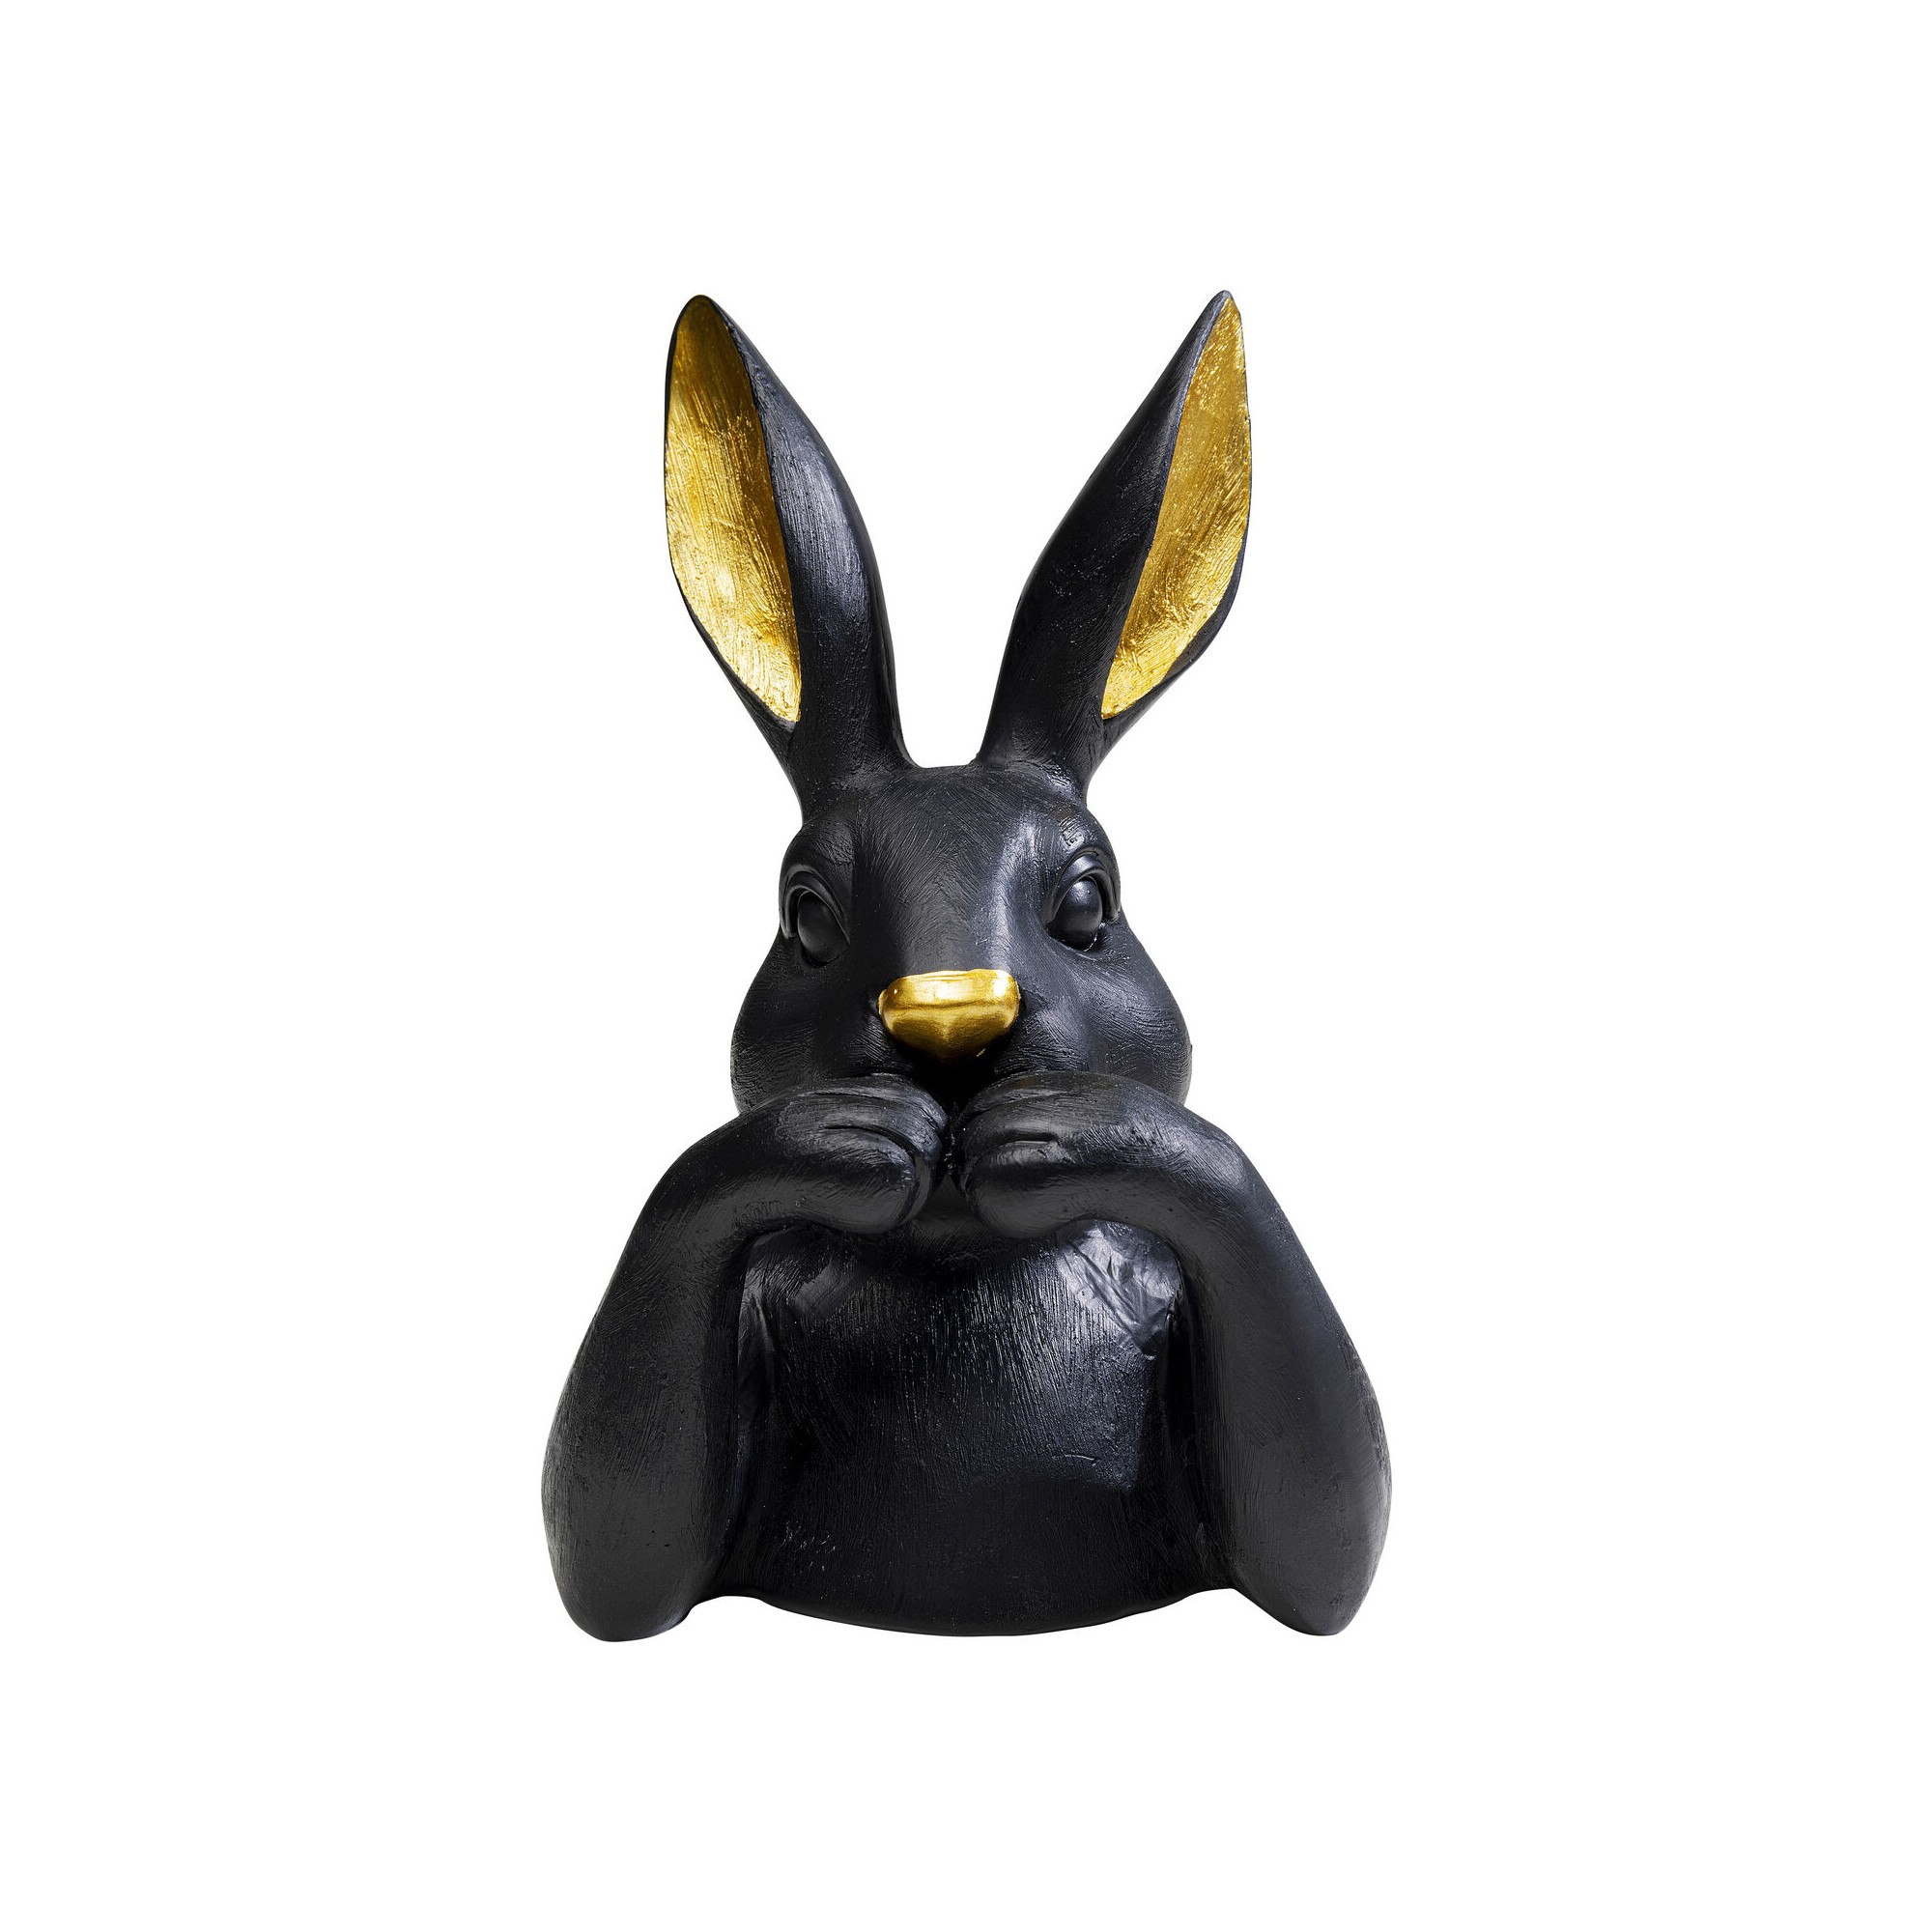 Deco bust rabbit black 23cm Kare Design